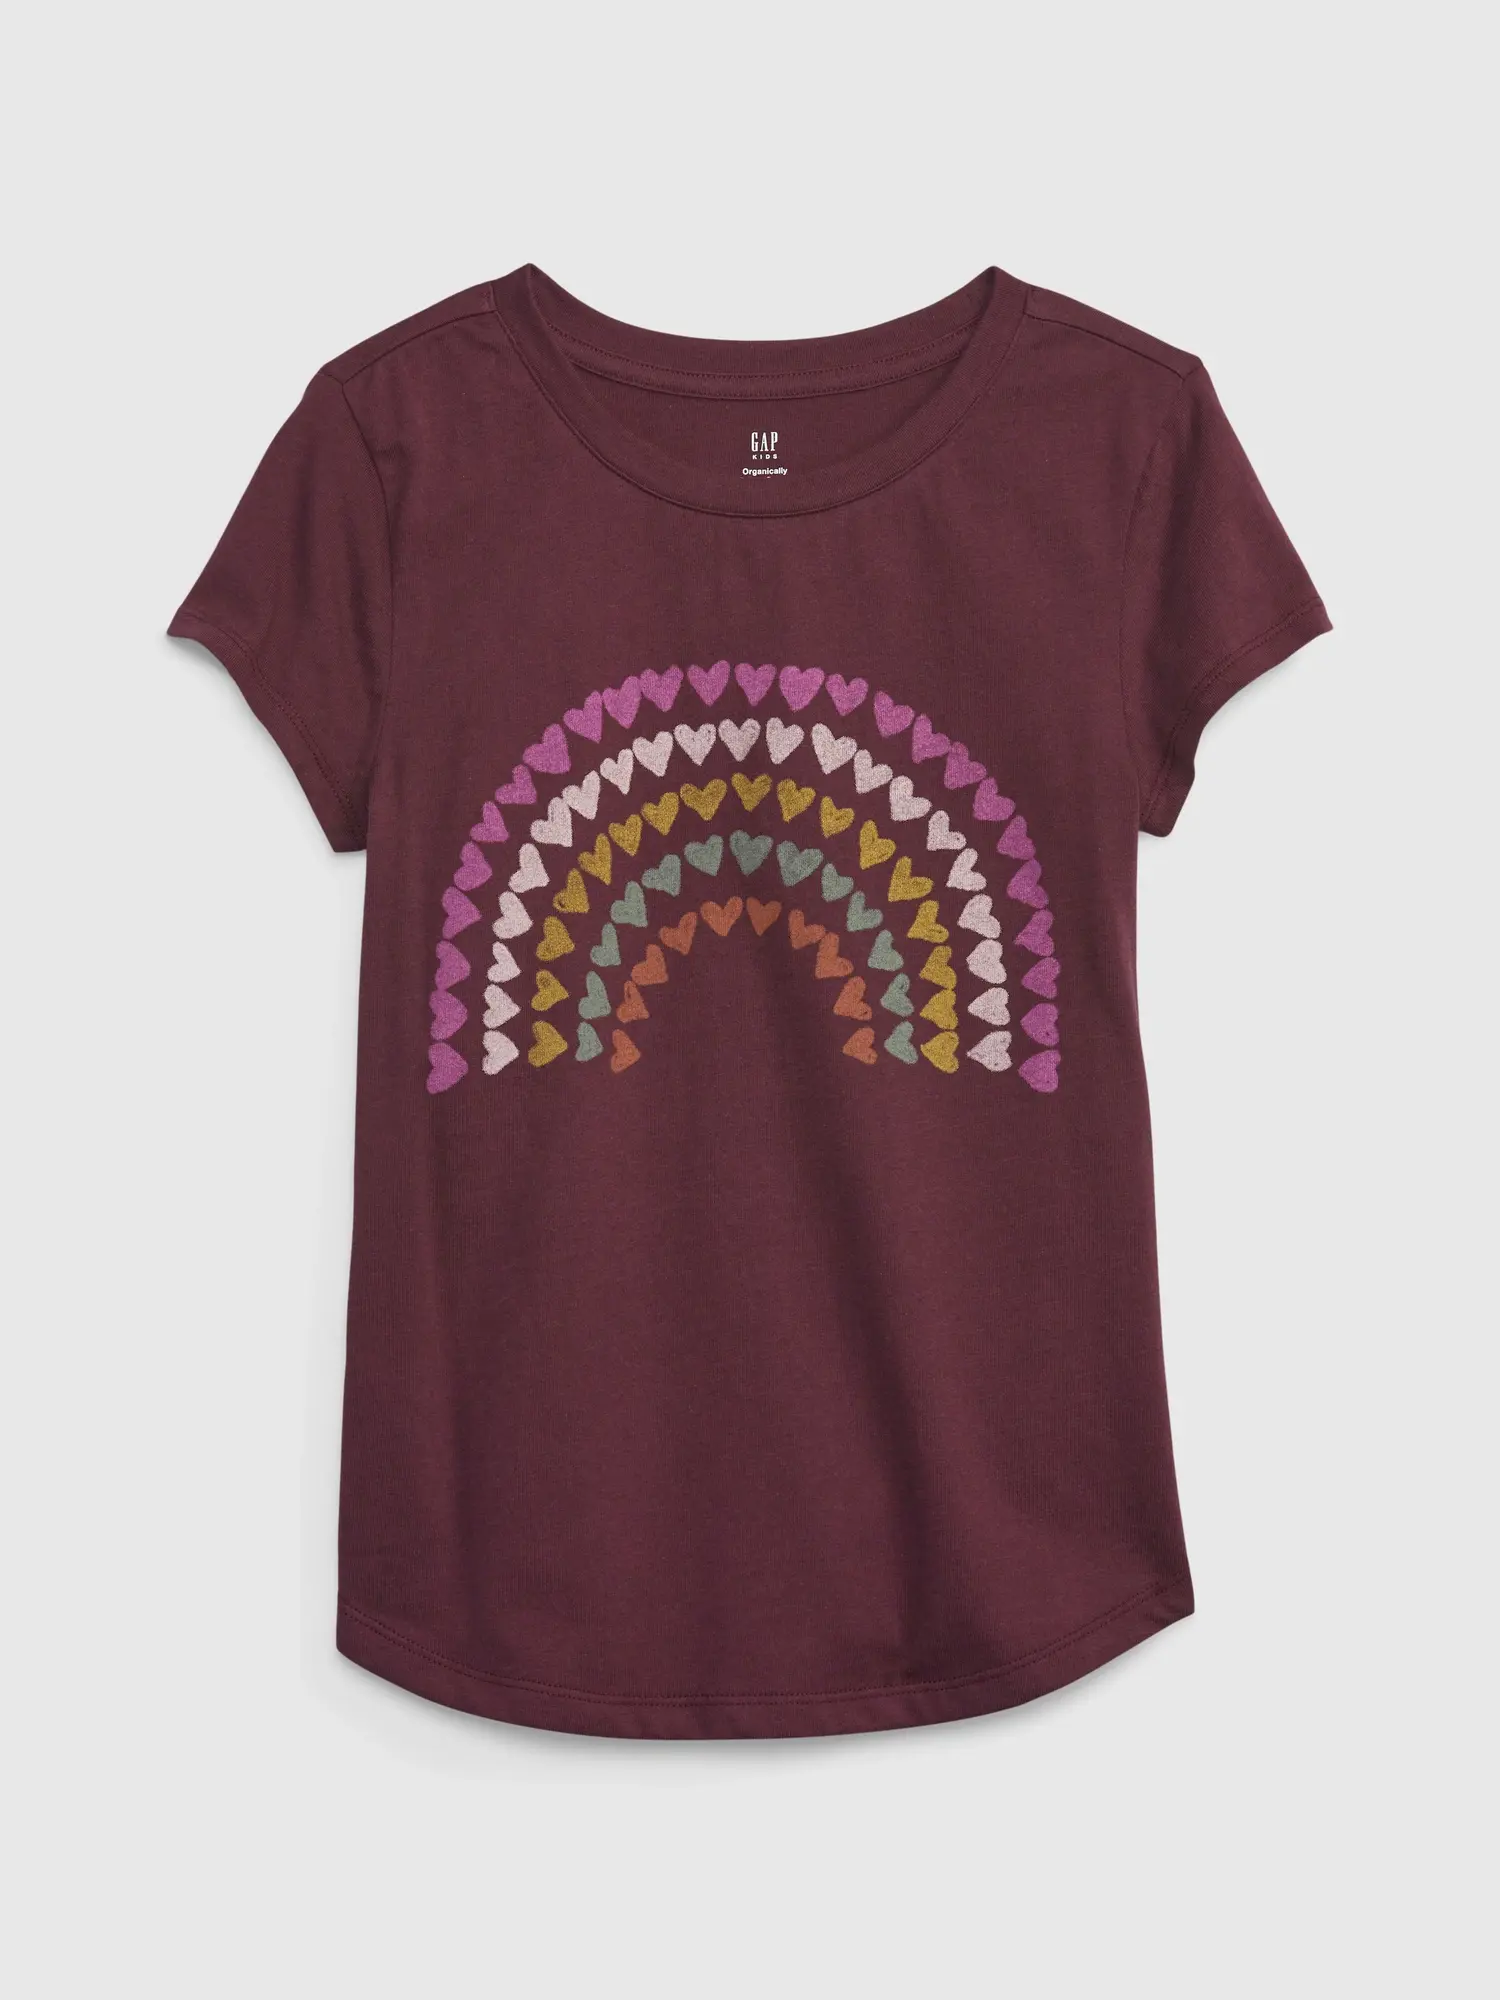 Gap Kids 100% Organic Cotton Graphic T-Shirt purple. 1